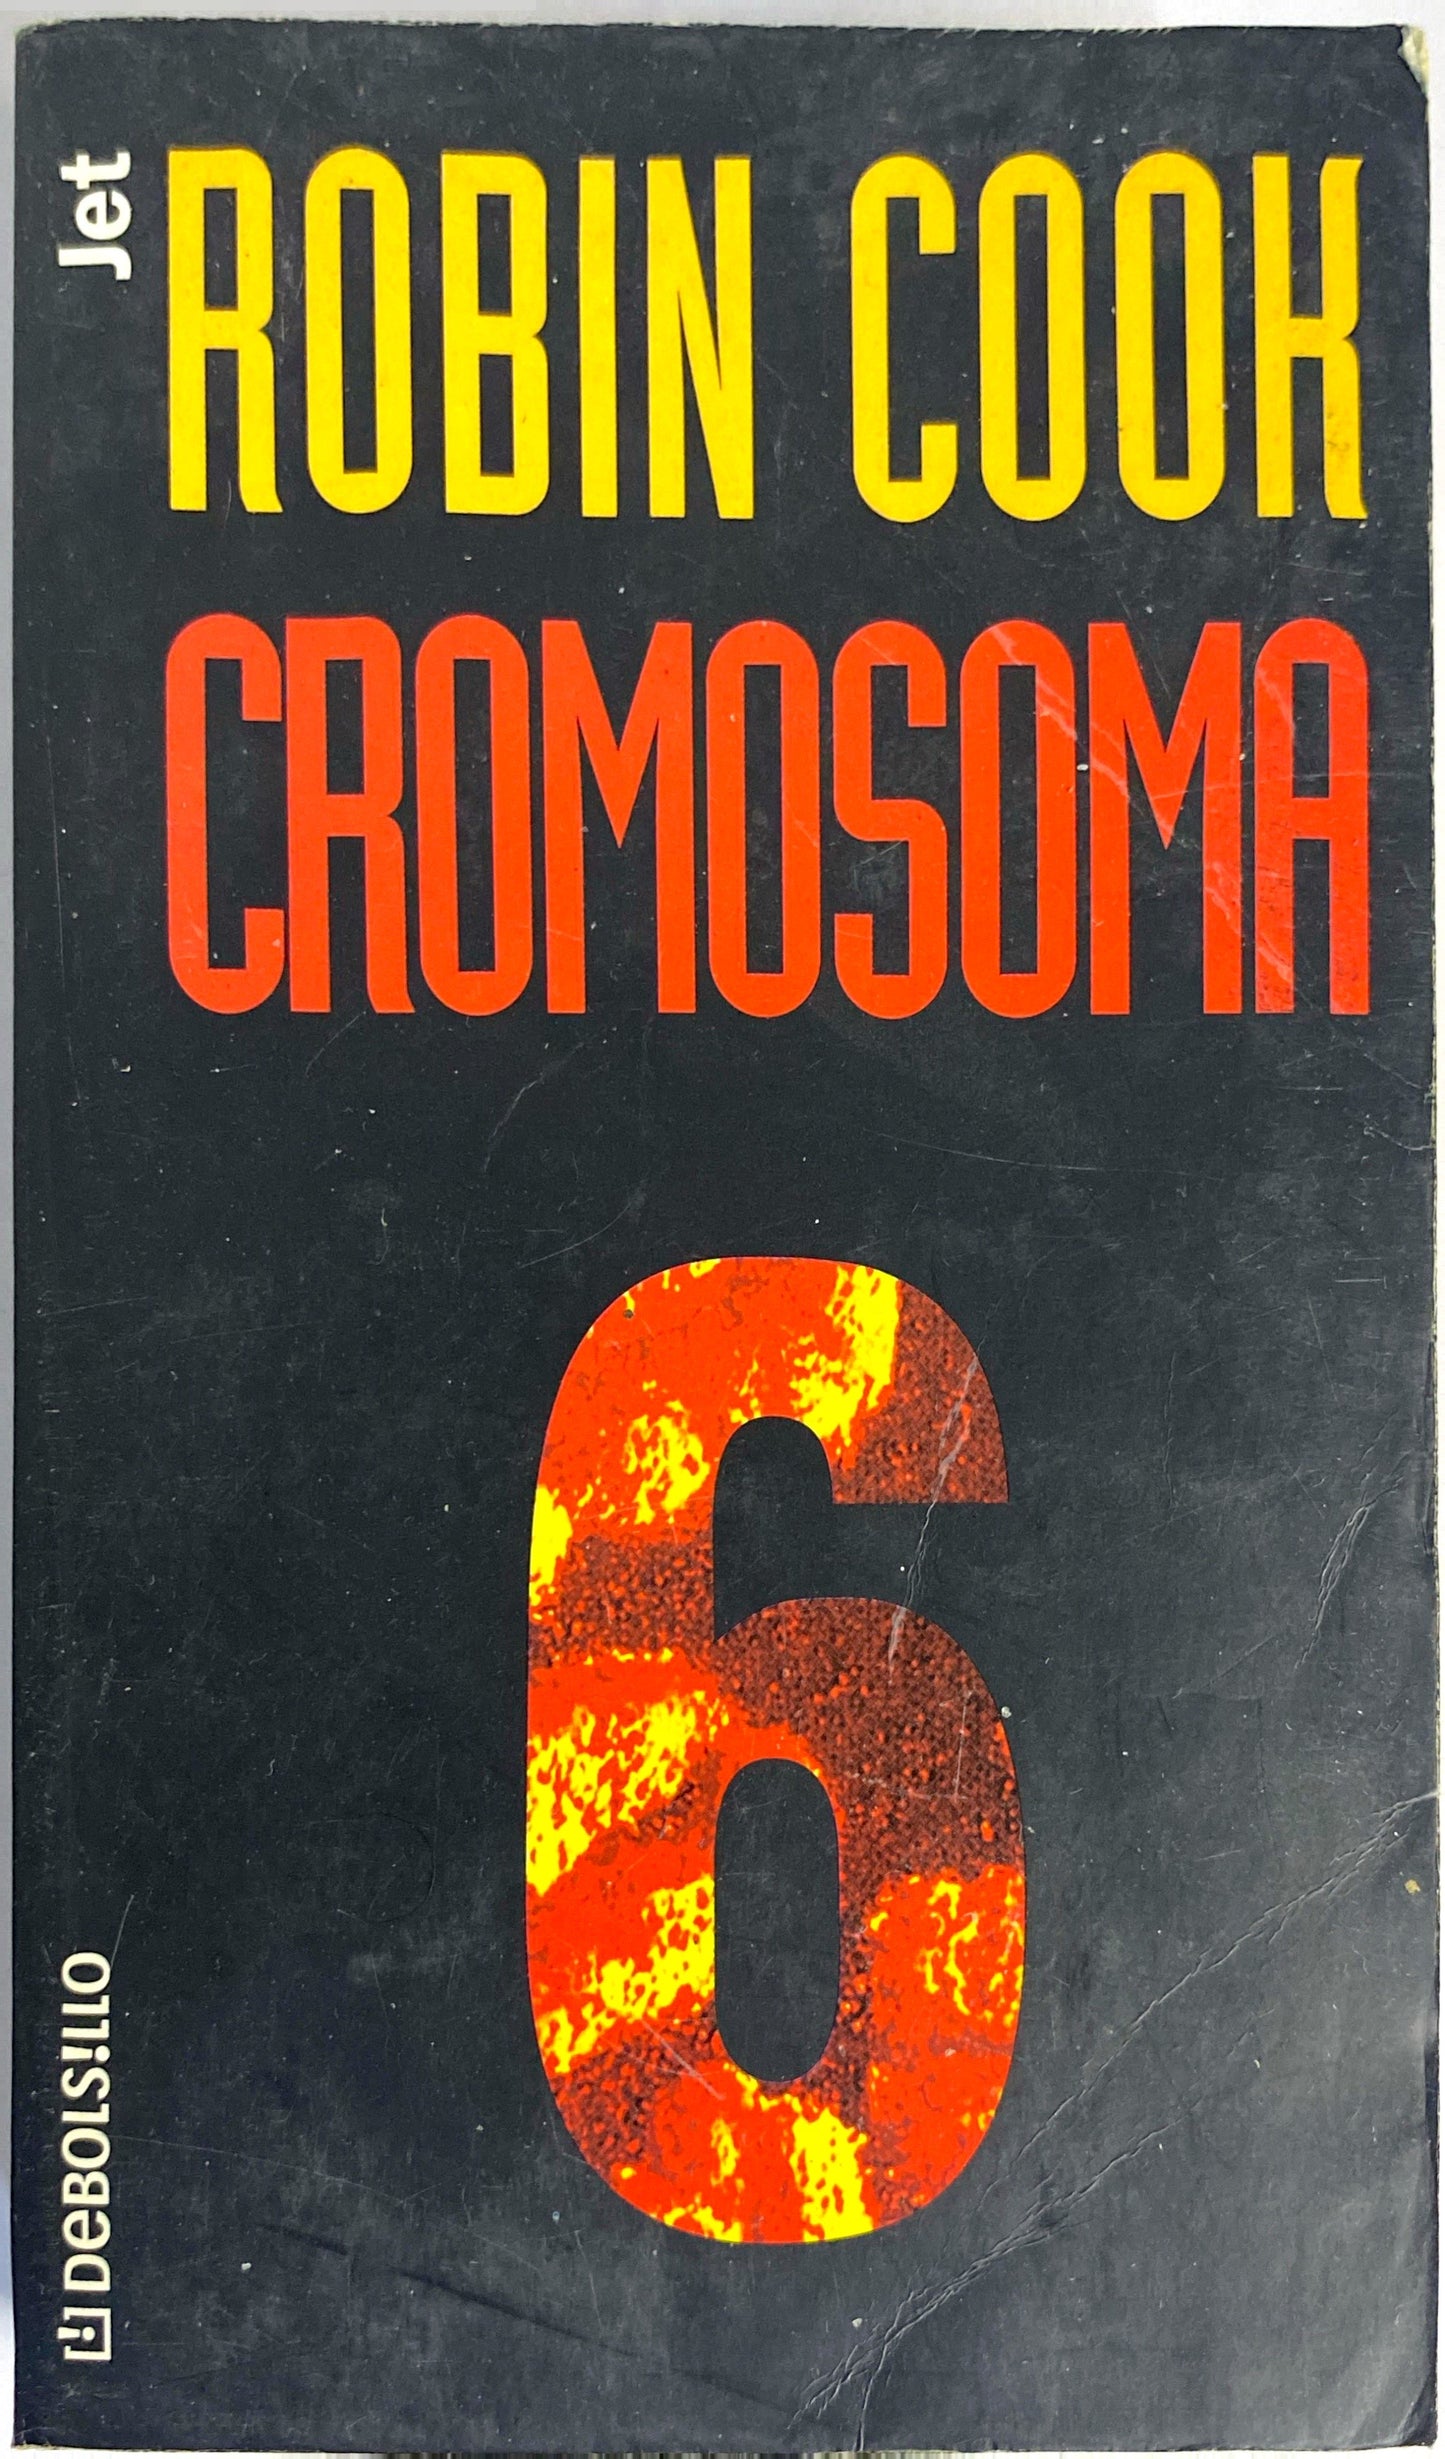 Cromosoma 6 | Robin Cook